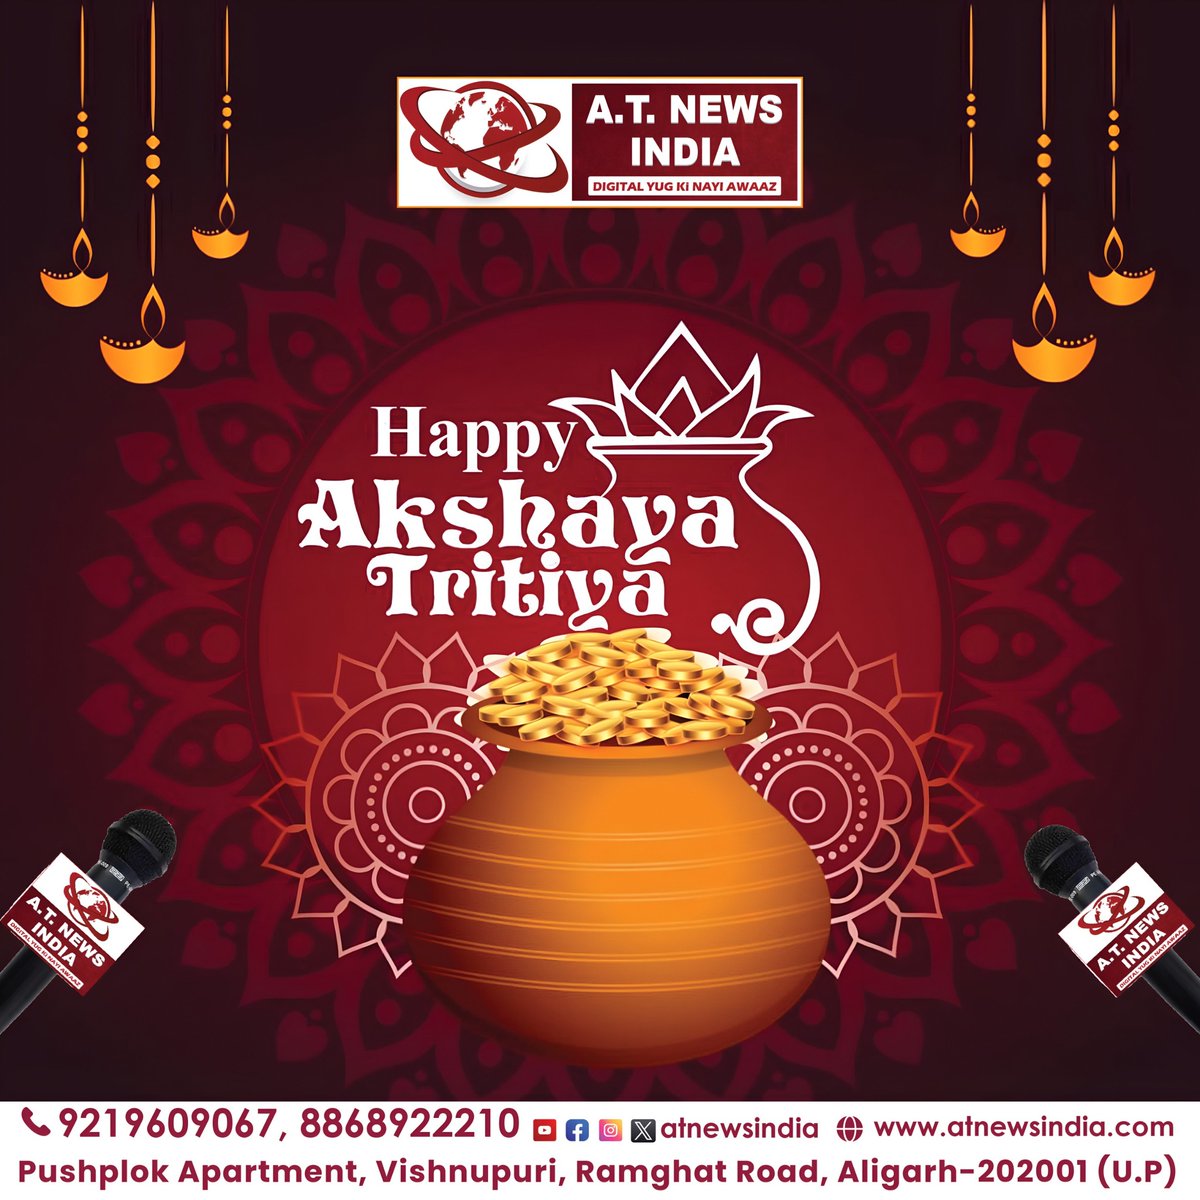 📷May the blessings of Akshaya Tritiya enrich your life with prosperity, peace, and endless happiness! 📷📷 #atnewsindia #AkshayaTritiya #Abundance #Wealth #GoodFortune #Blessings #Joy #Celebration #Aligarh